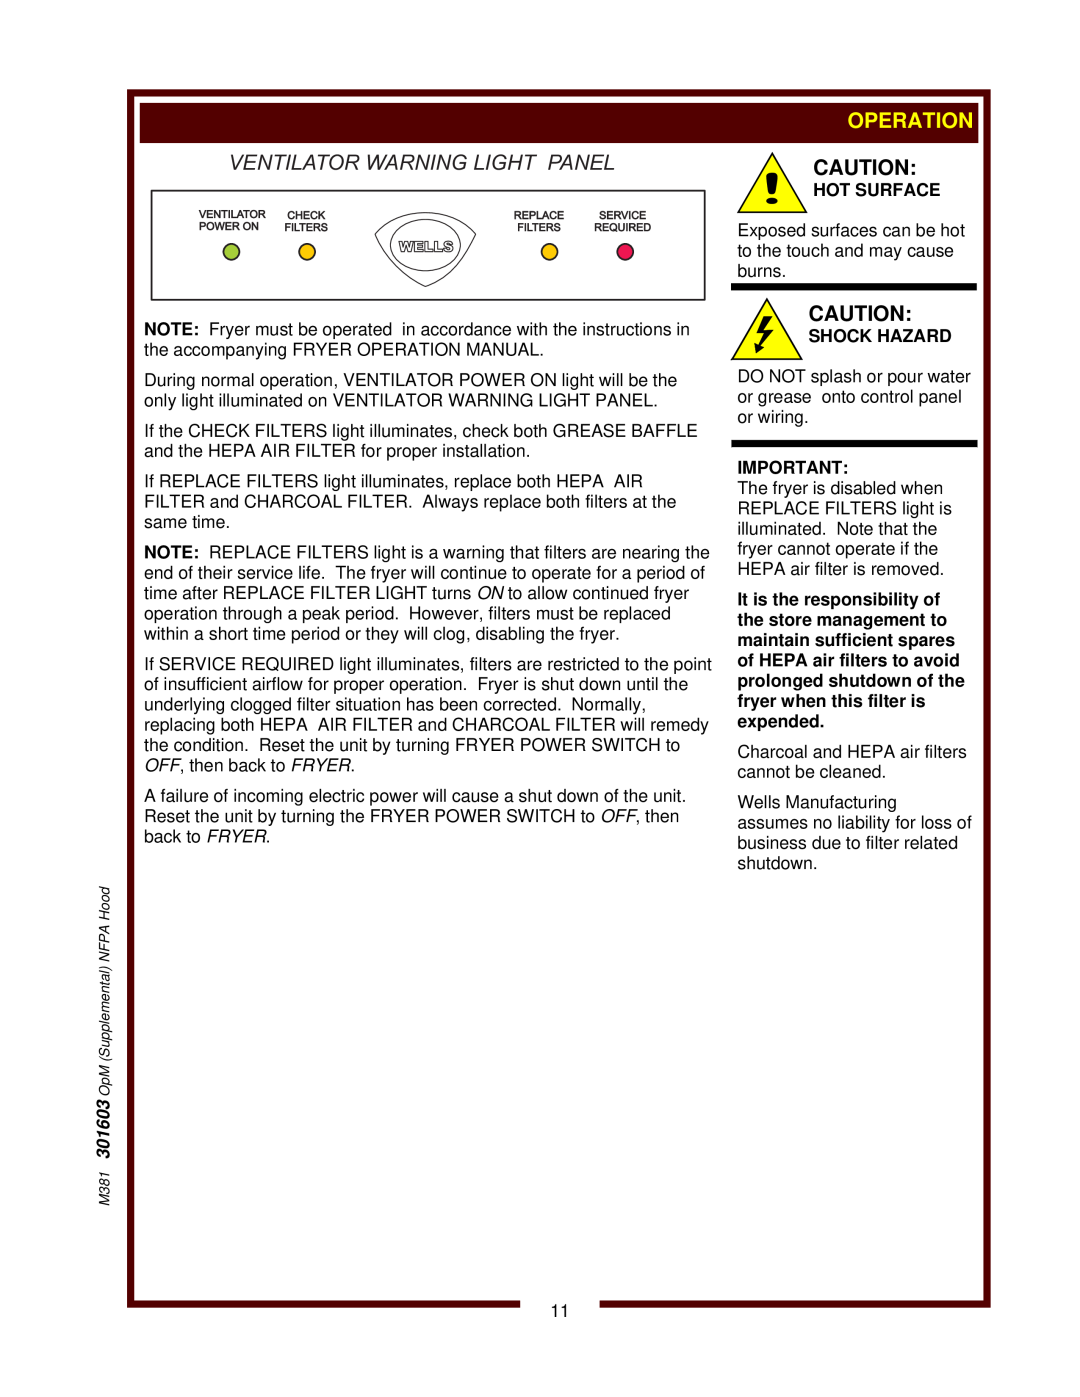 Wells WVAE-30F Ventilator Warning Light Panel, M381 301603 OpM Supplemental NFPA Hood, Check, Replace, Service, Power On 